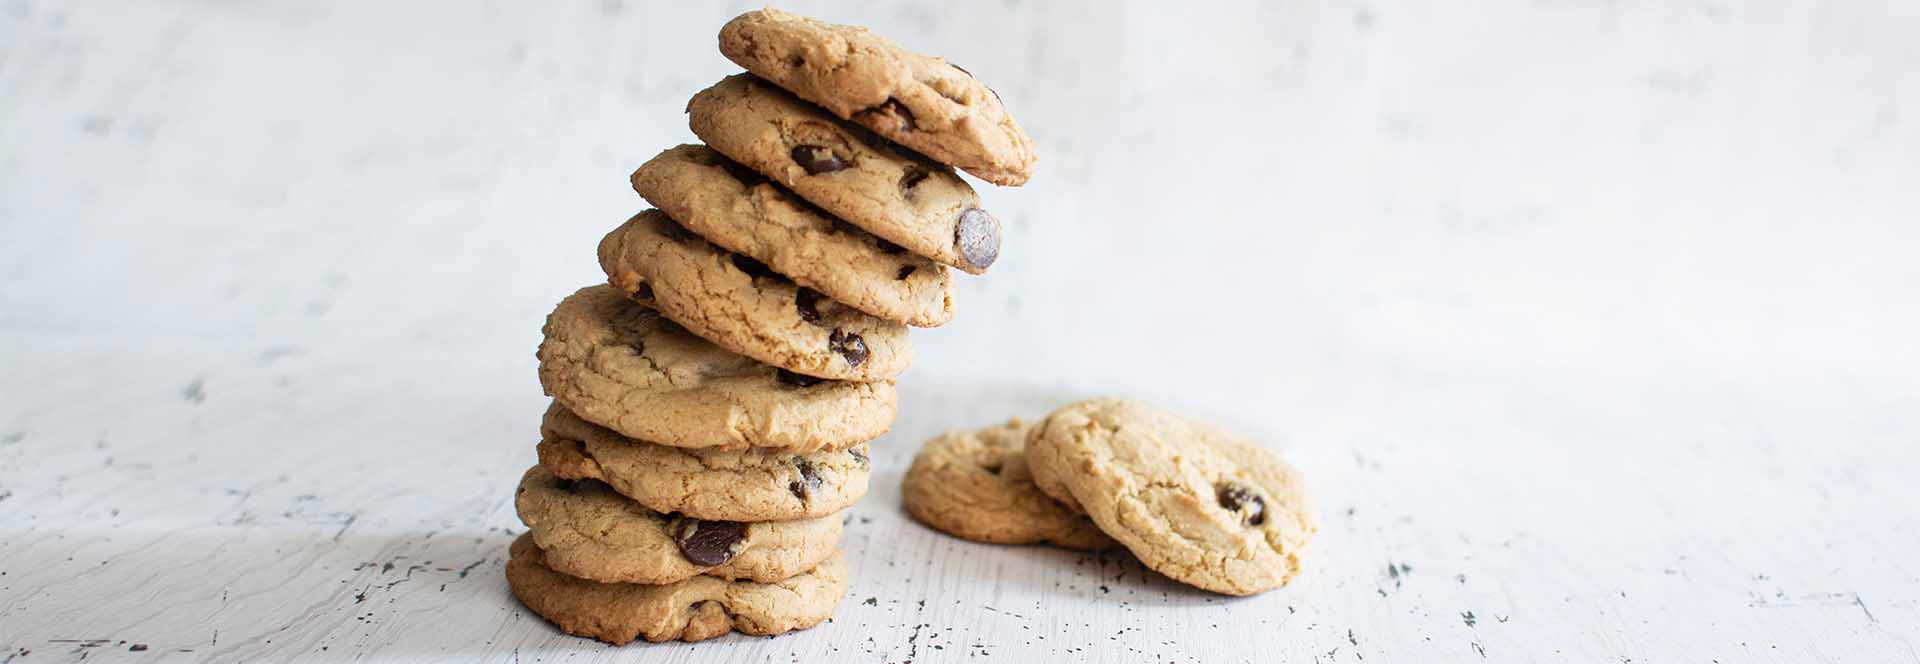 Cookie Stack Imagine baking